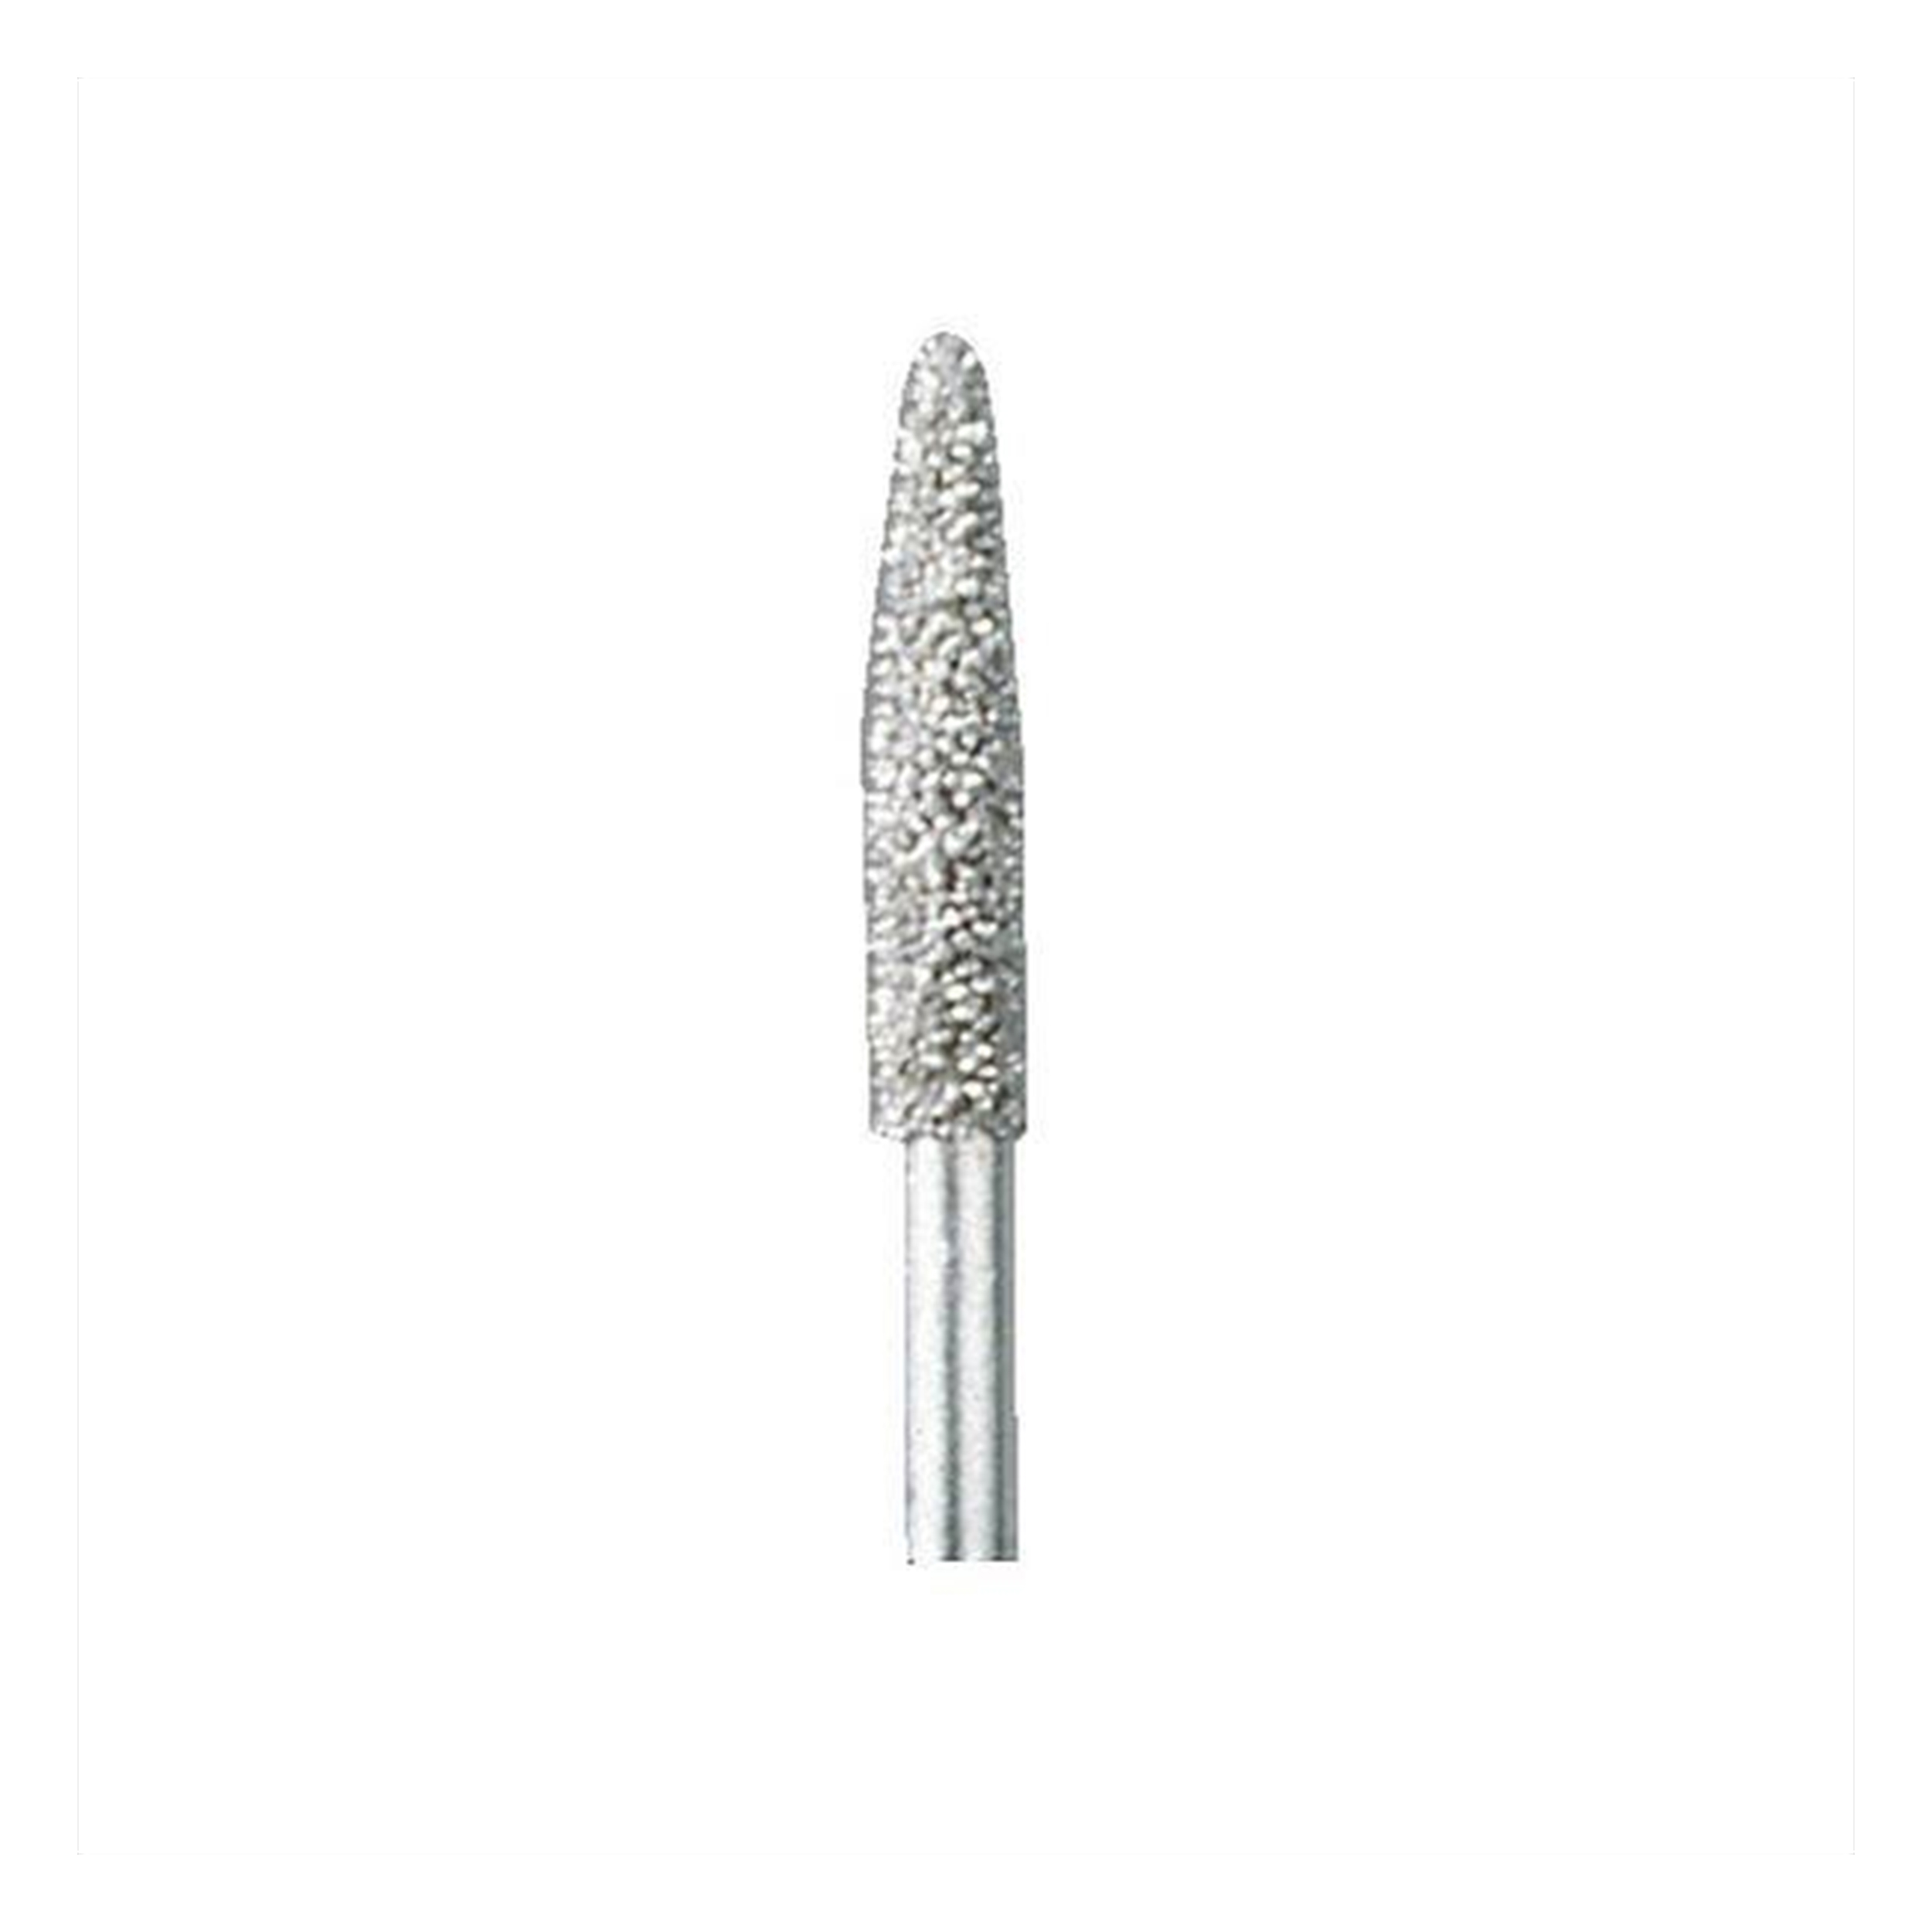 Structured Tooth Tungsten Carbide Cutter, 1/4" Dia., 1/8" Shank